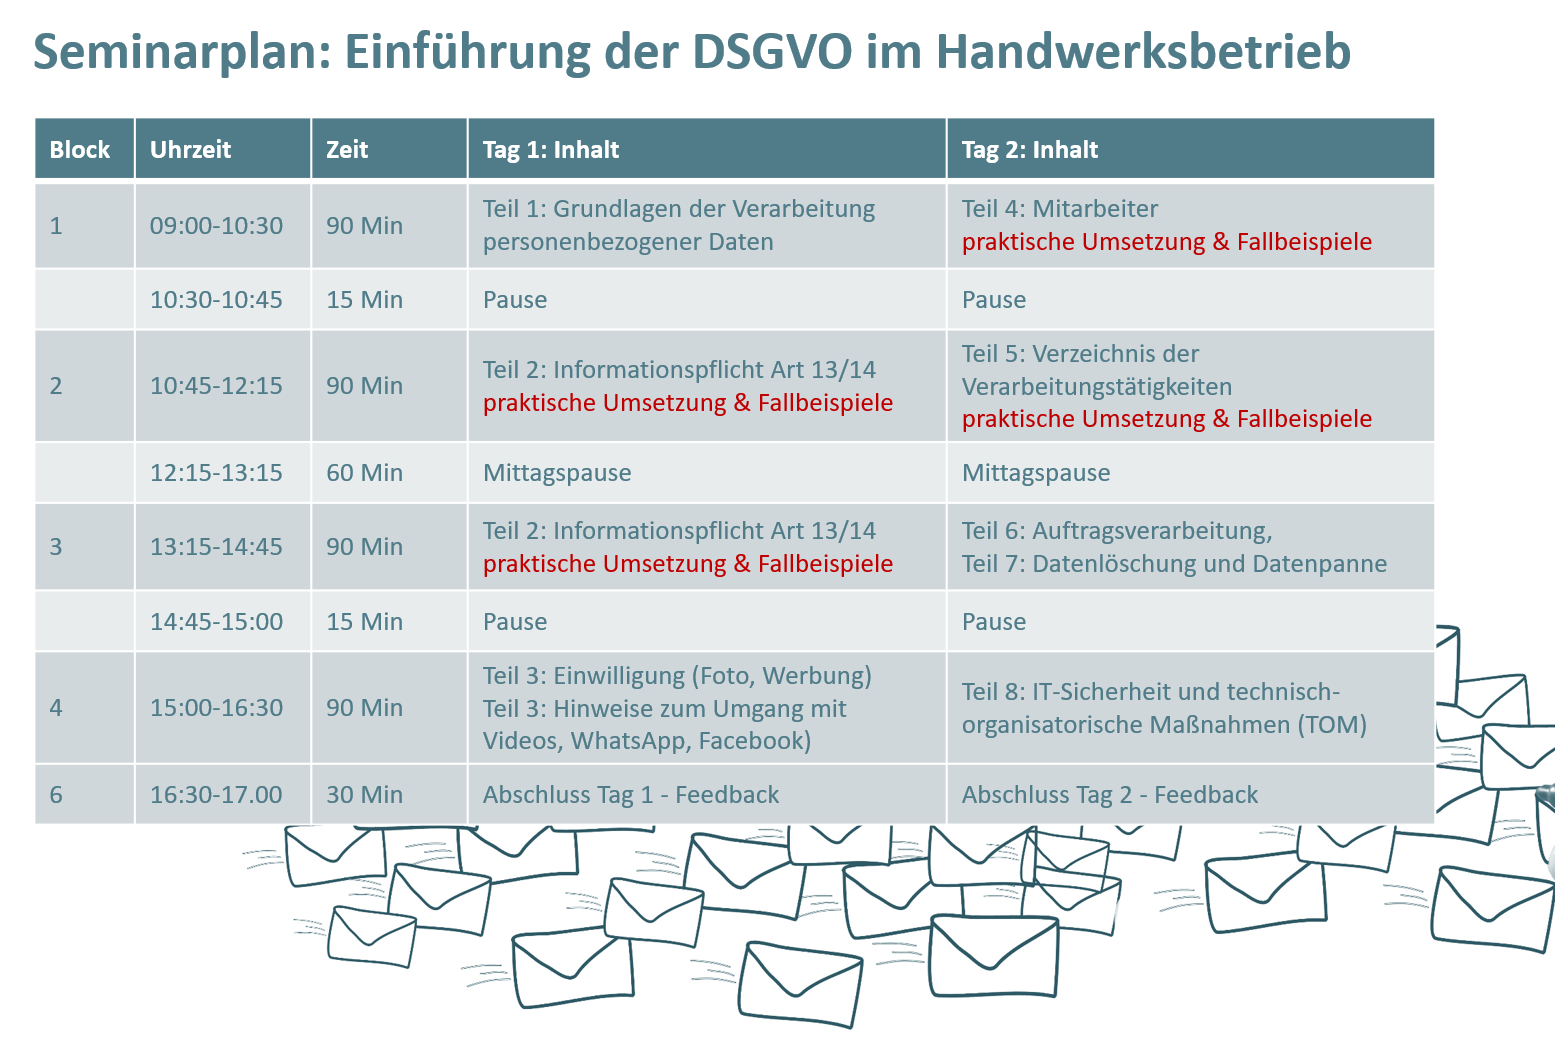 DSGVO-Seminar: Stundenplan